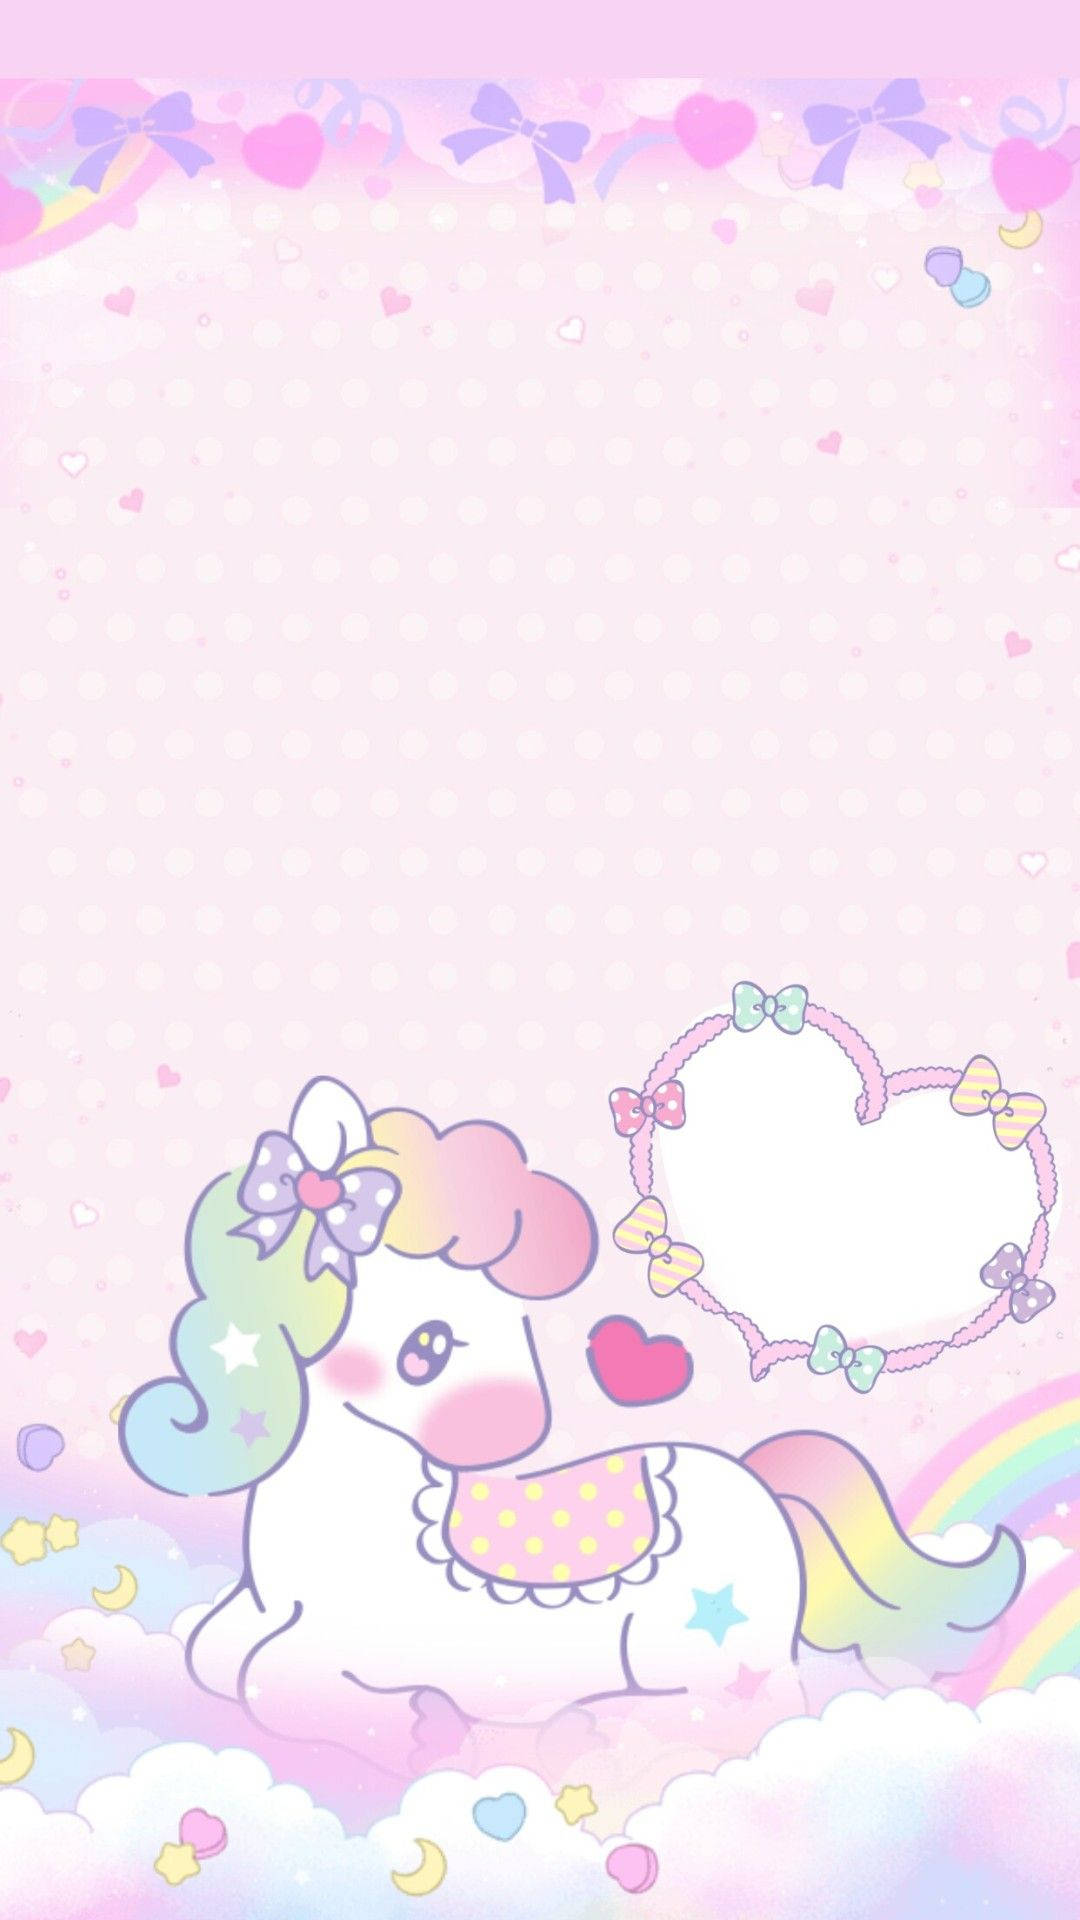 Rainbow unicorn background Pastel gradient  Stock Illustration  97182384  PIXTA